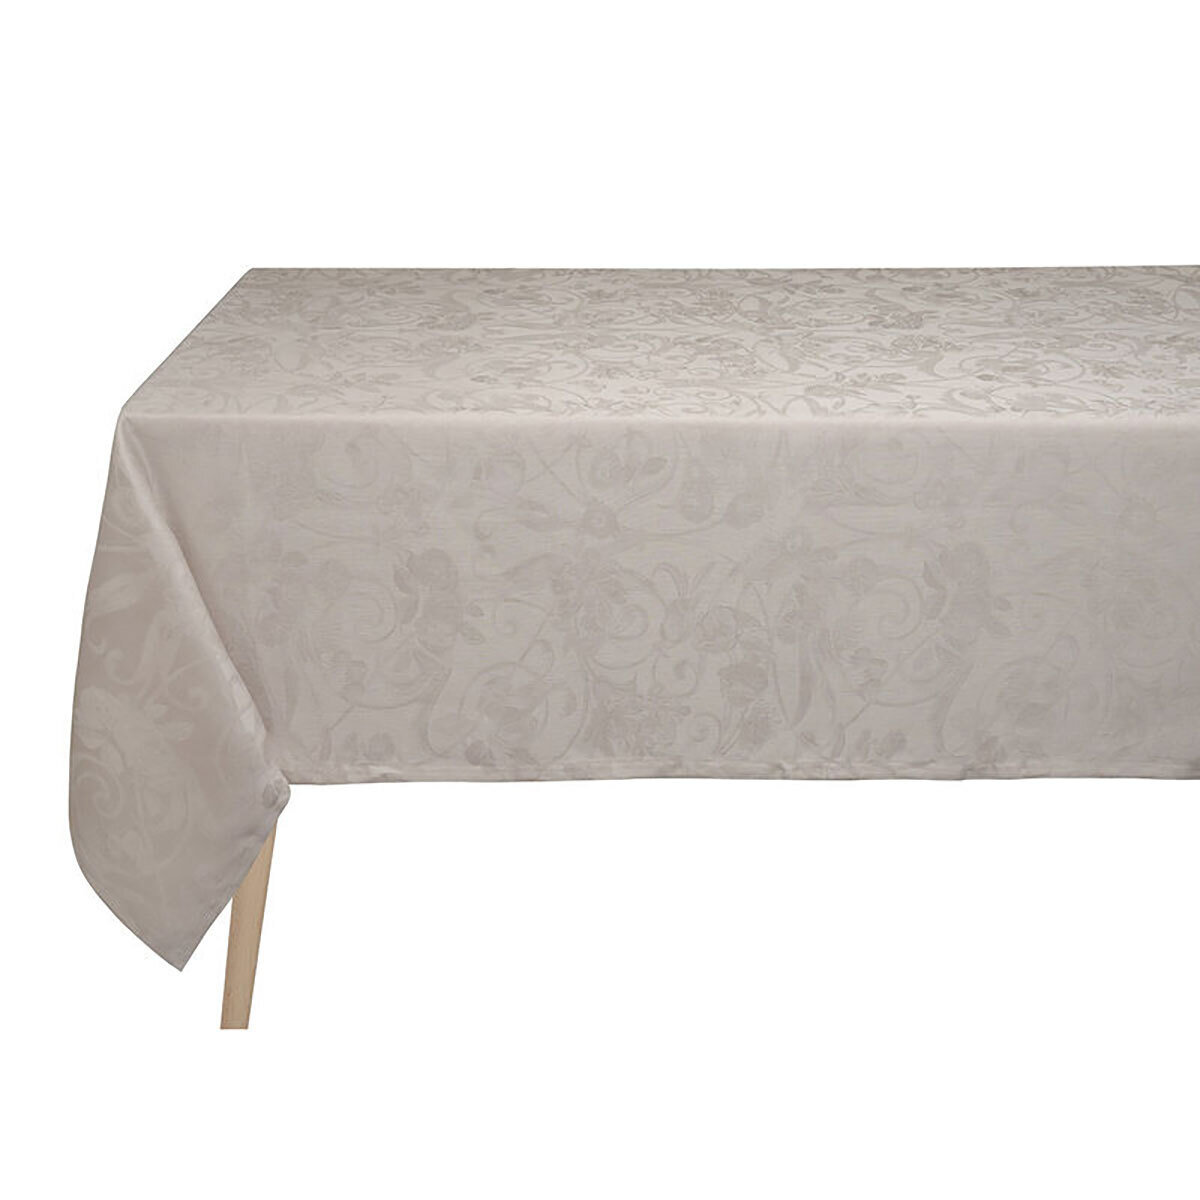 Le Jacquard Francais Tablecloth Tivoli Beige 100% Linen 94 x 94 Inch 28111